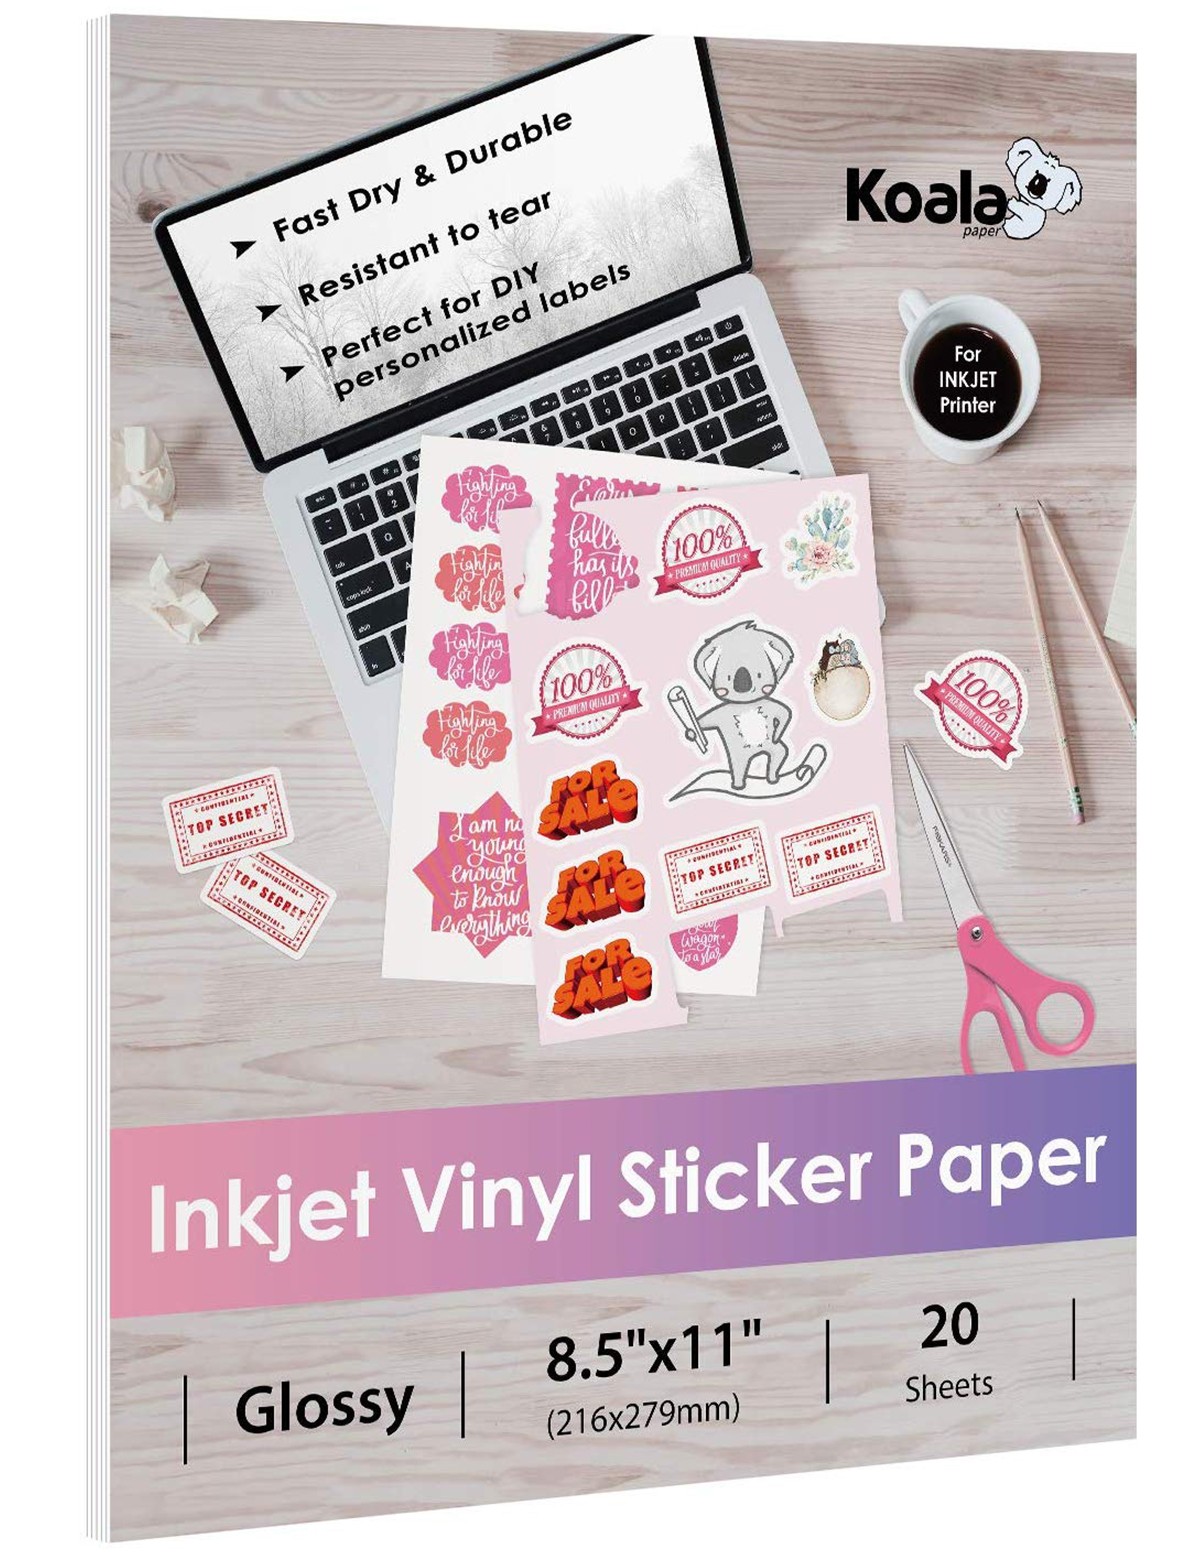 Koala Vinyl Sticker Paper Glossy Printable Label Waterproof 8.5x11 Inches  Full Sheet for Inkjet Printer 20 Sheets